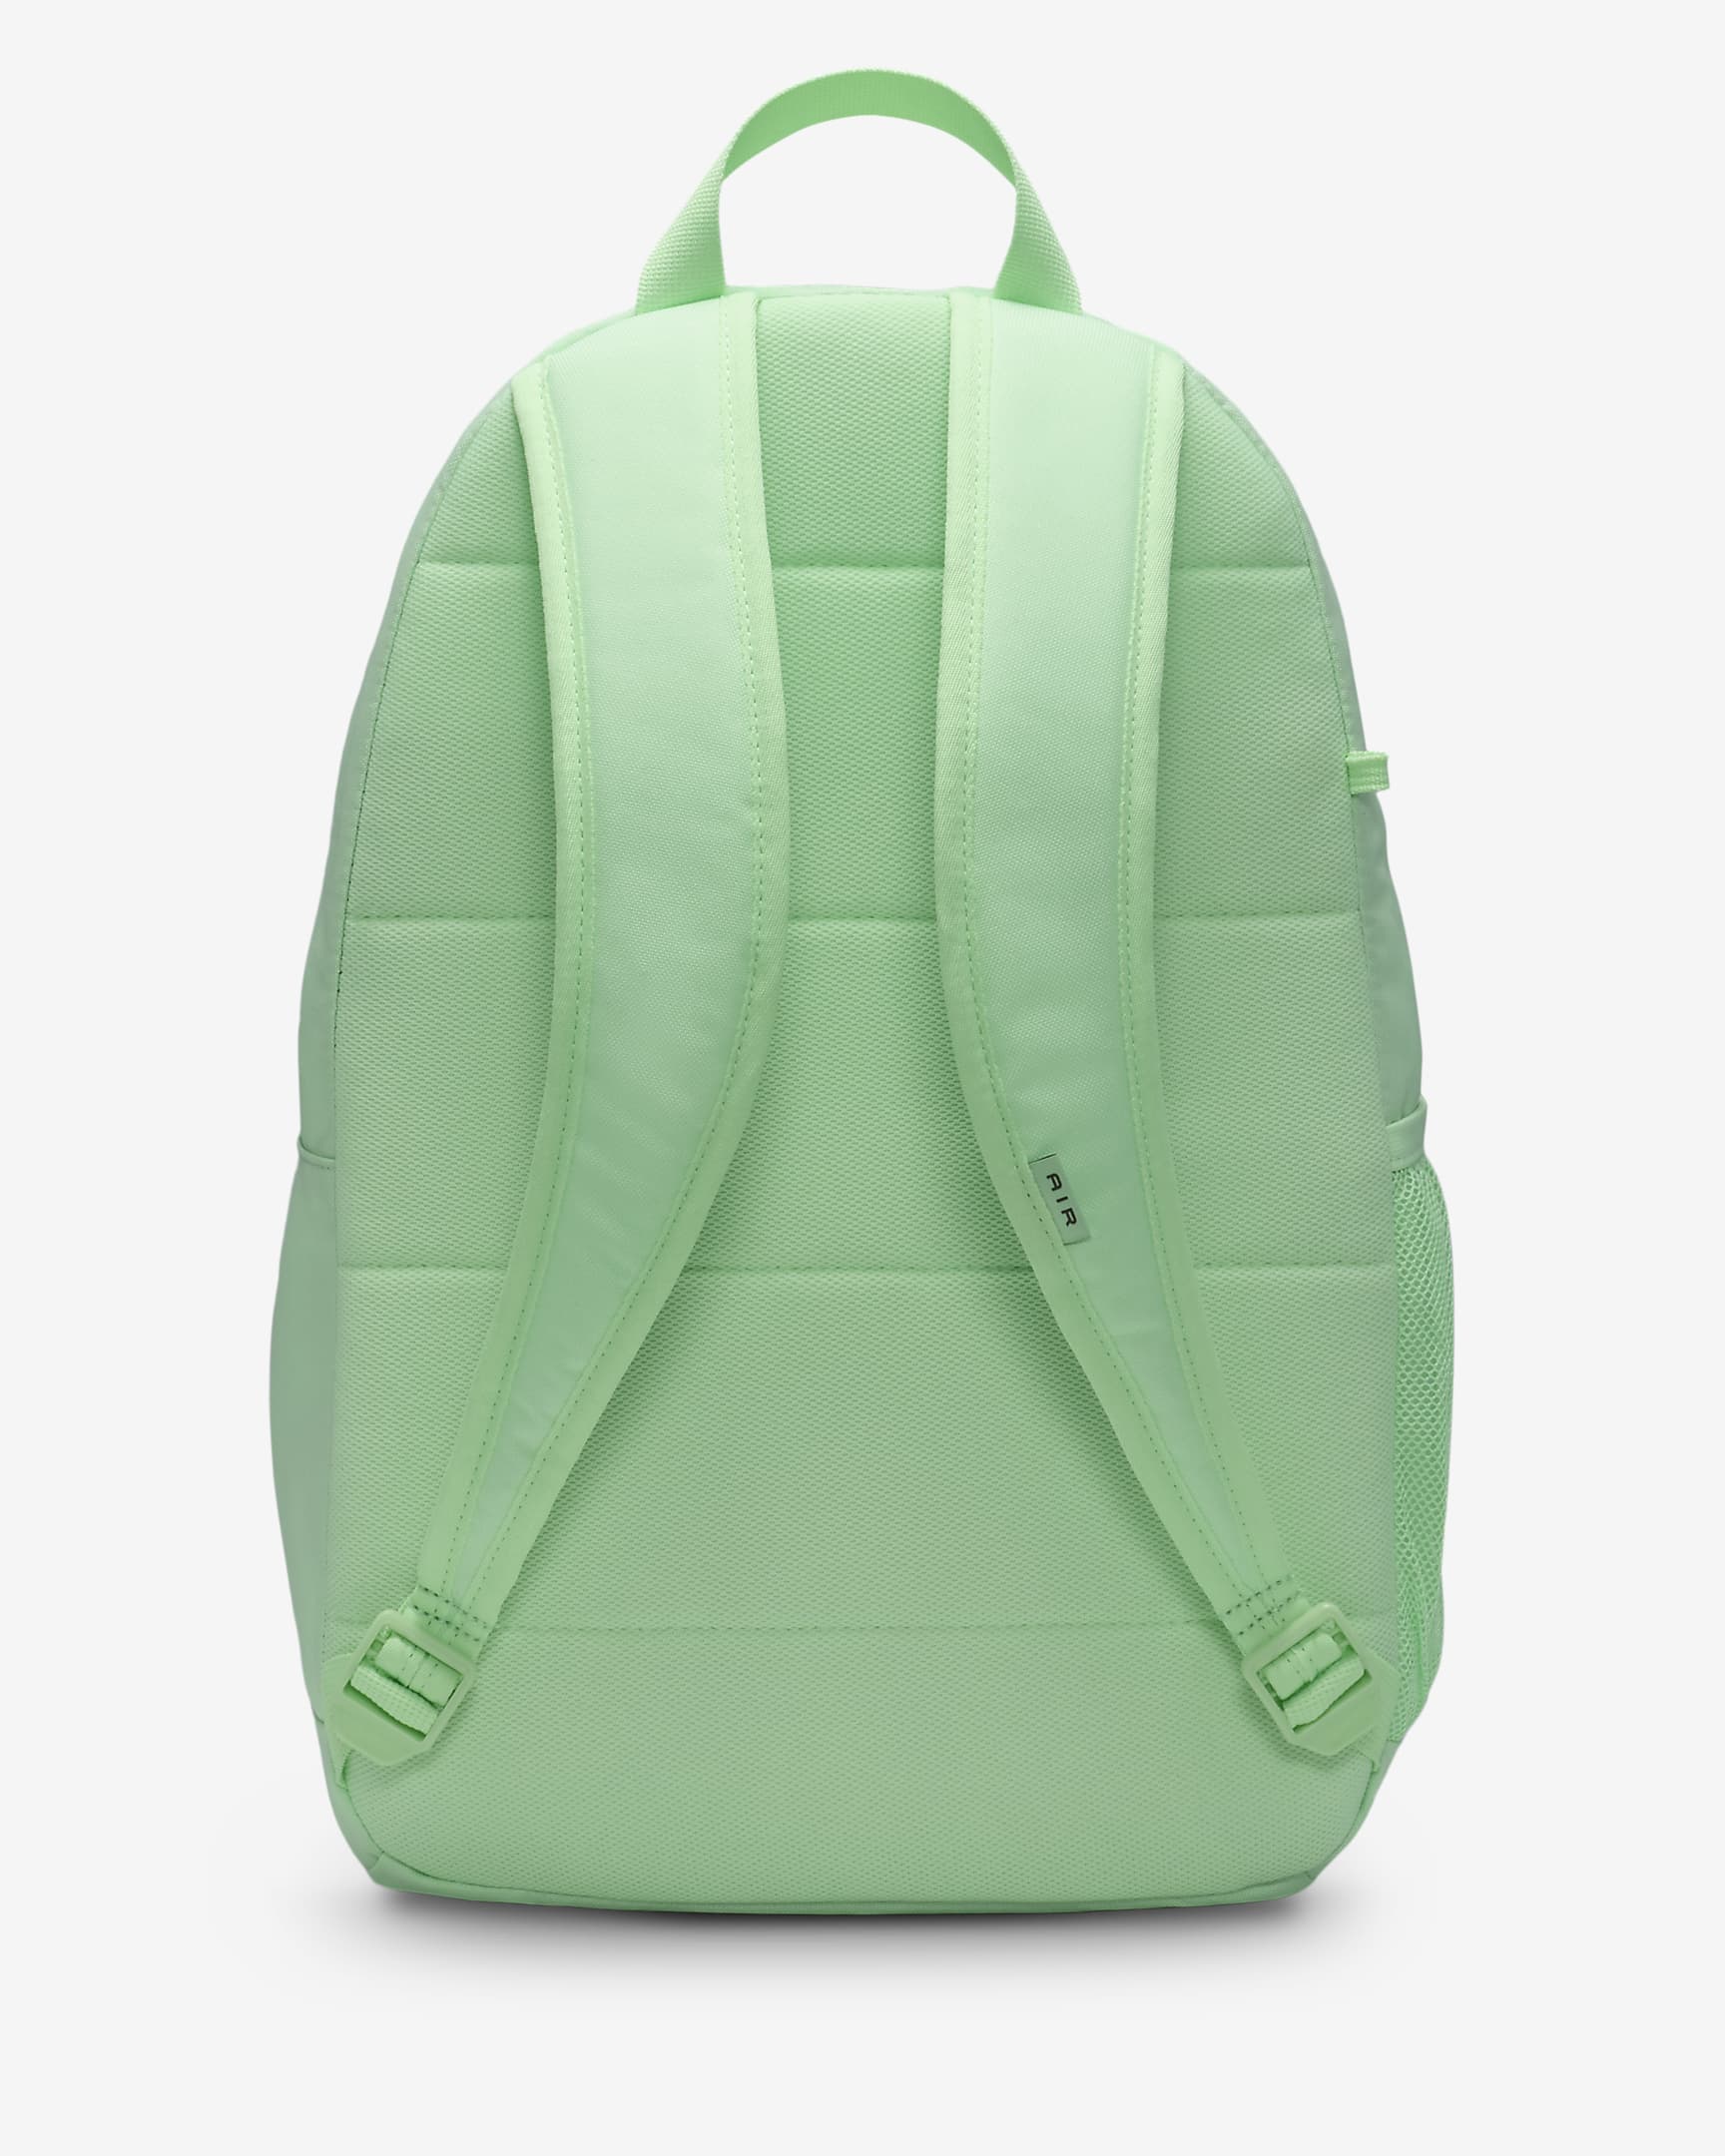 Sac à dos Nike pour enfant (20 L) - Vapor Green/Vapor Green/Cargo Khaki